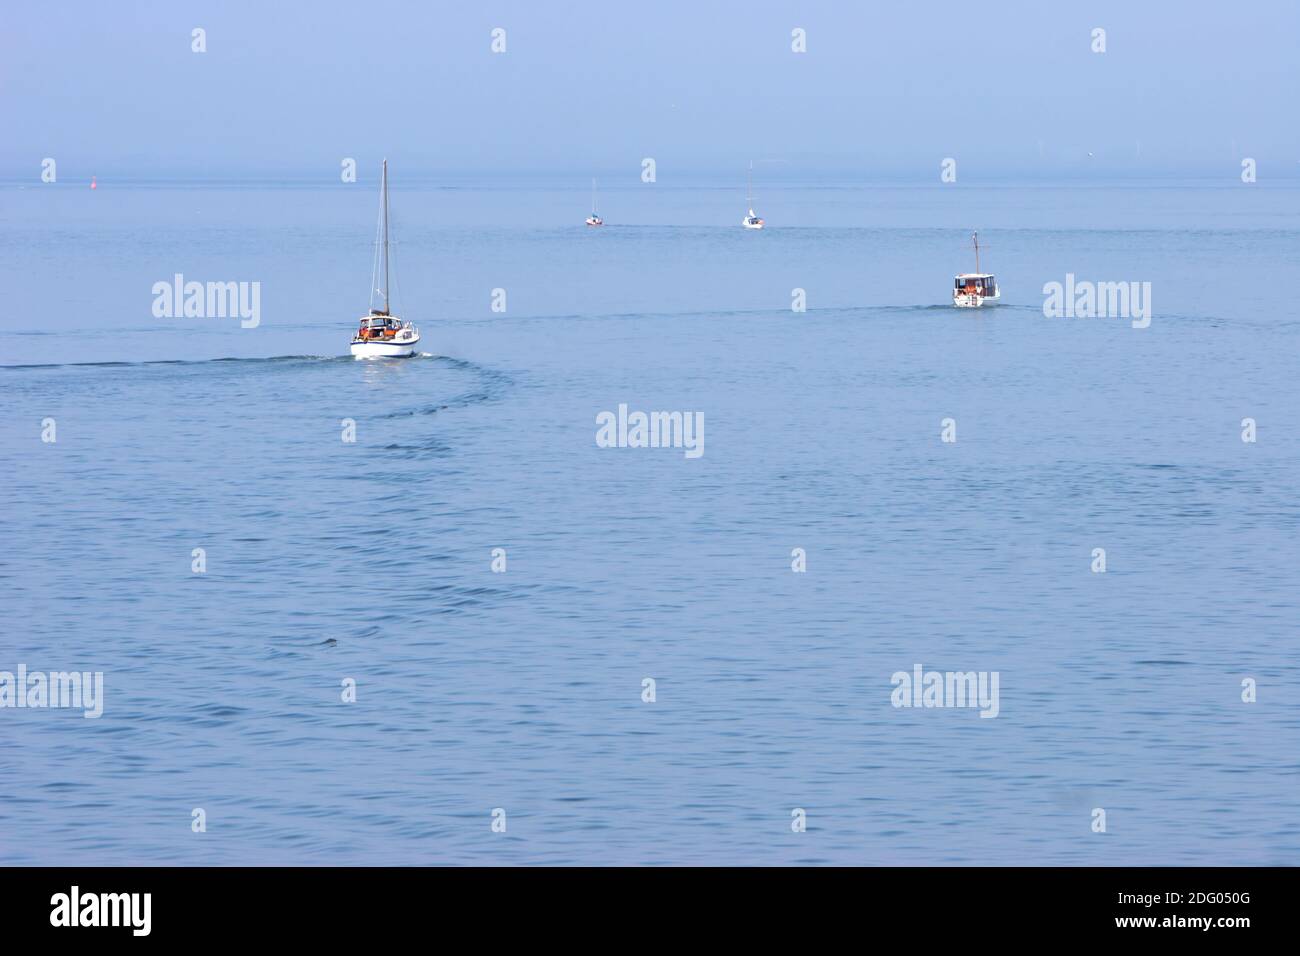 Sailboats on the North Sea Stock Photo